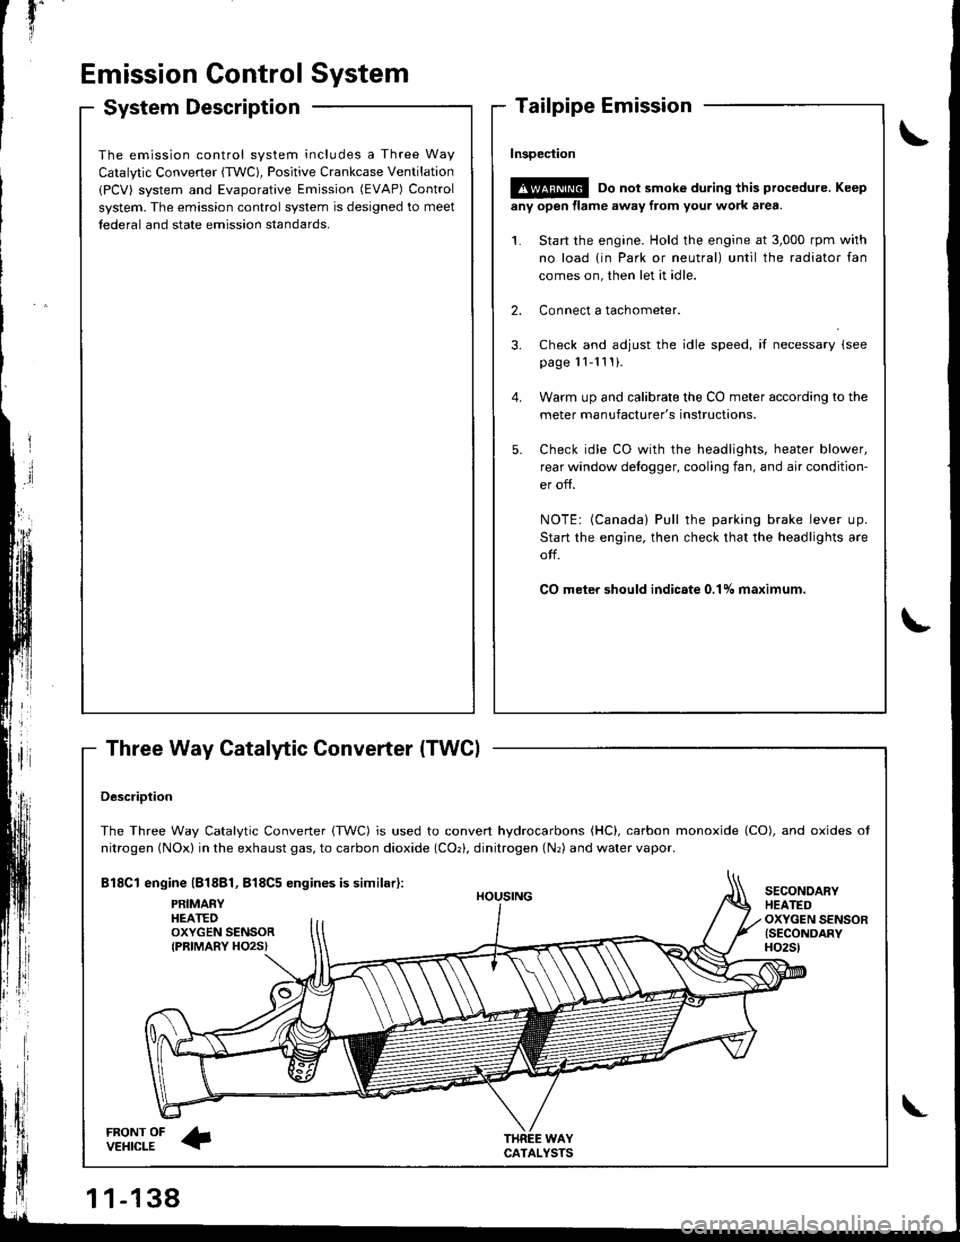 ACURA INTEGRA 1998  Service Repair Manual t"iI
Emission Gontrol System
System Description
Three Way Catalytic Converter (TWCI
\
t
The emission control system includes a Three Way
Catalytic Converter (TWC), Positive Crankcase Ventilation
(PCV)